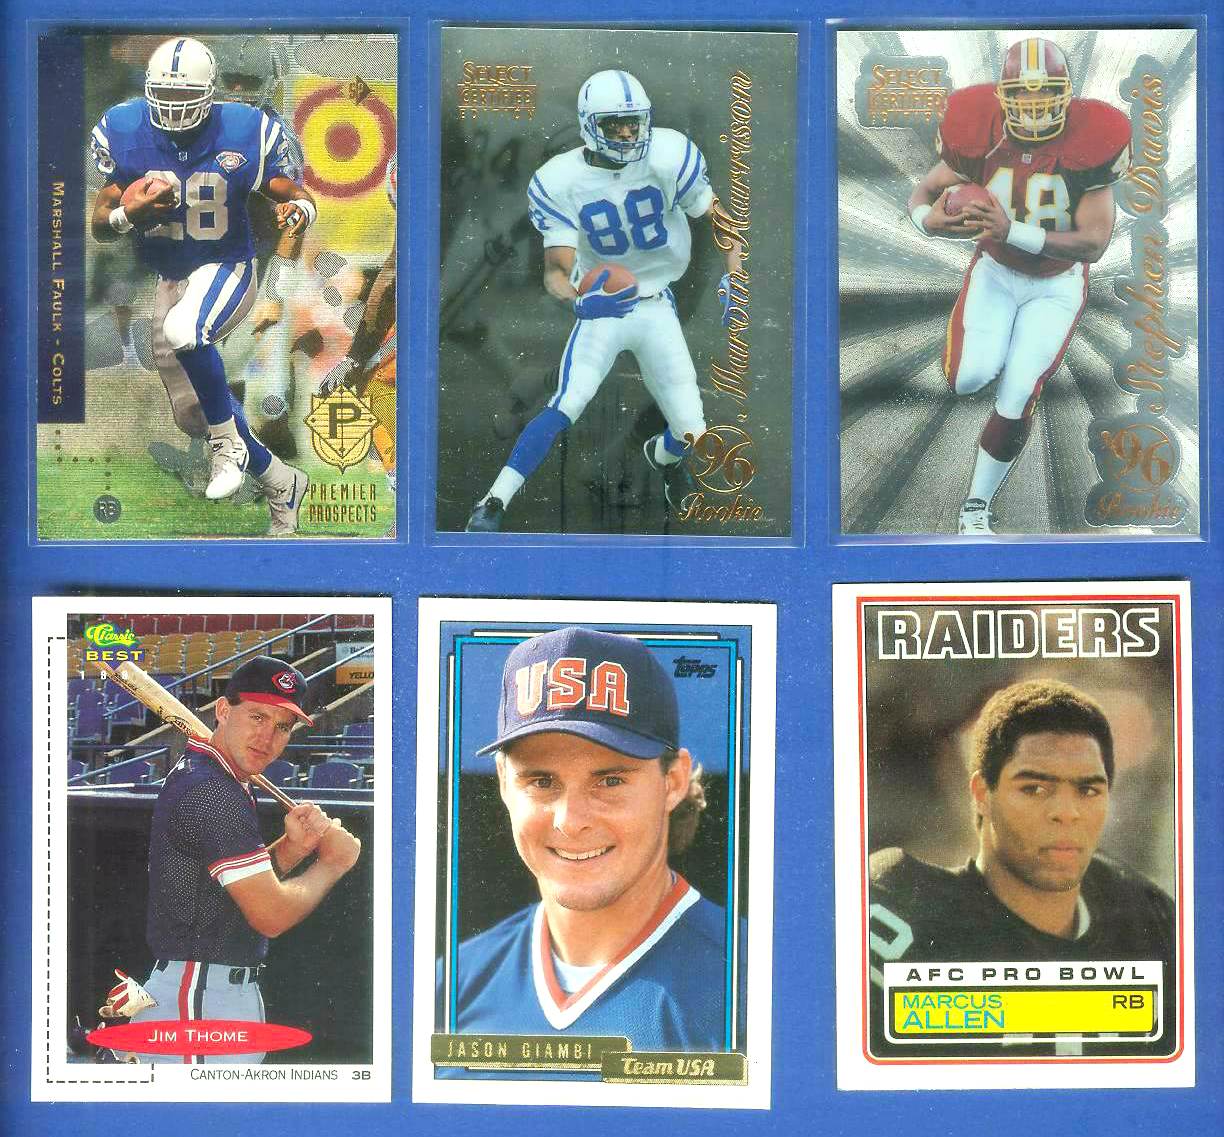 Marshall Faulk - 1994 SP FB #3 FOIL ROOKIE (Colts) Baseball cards value